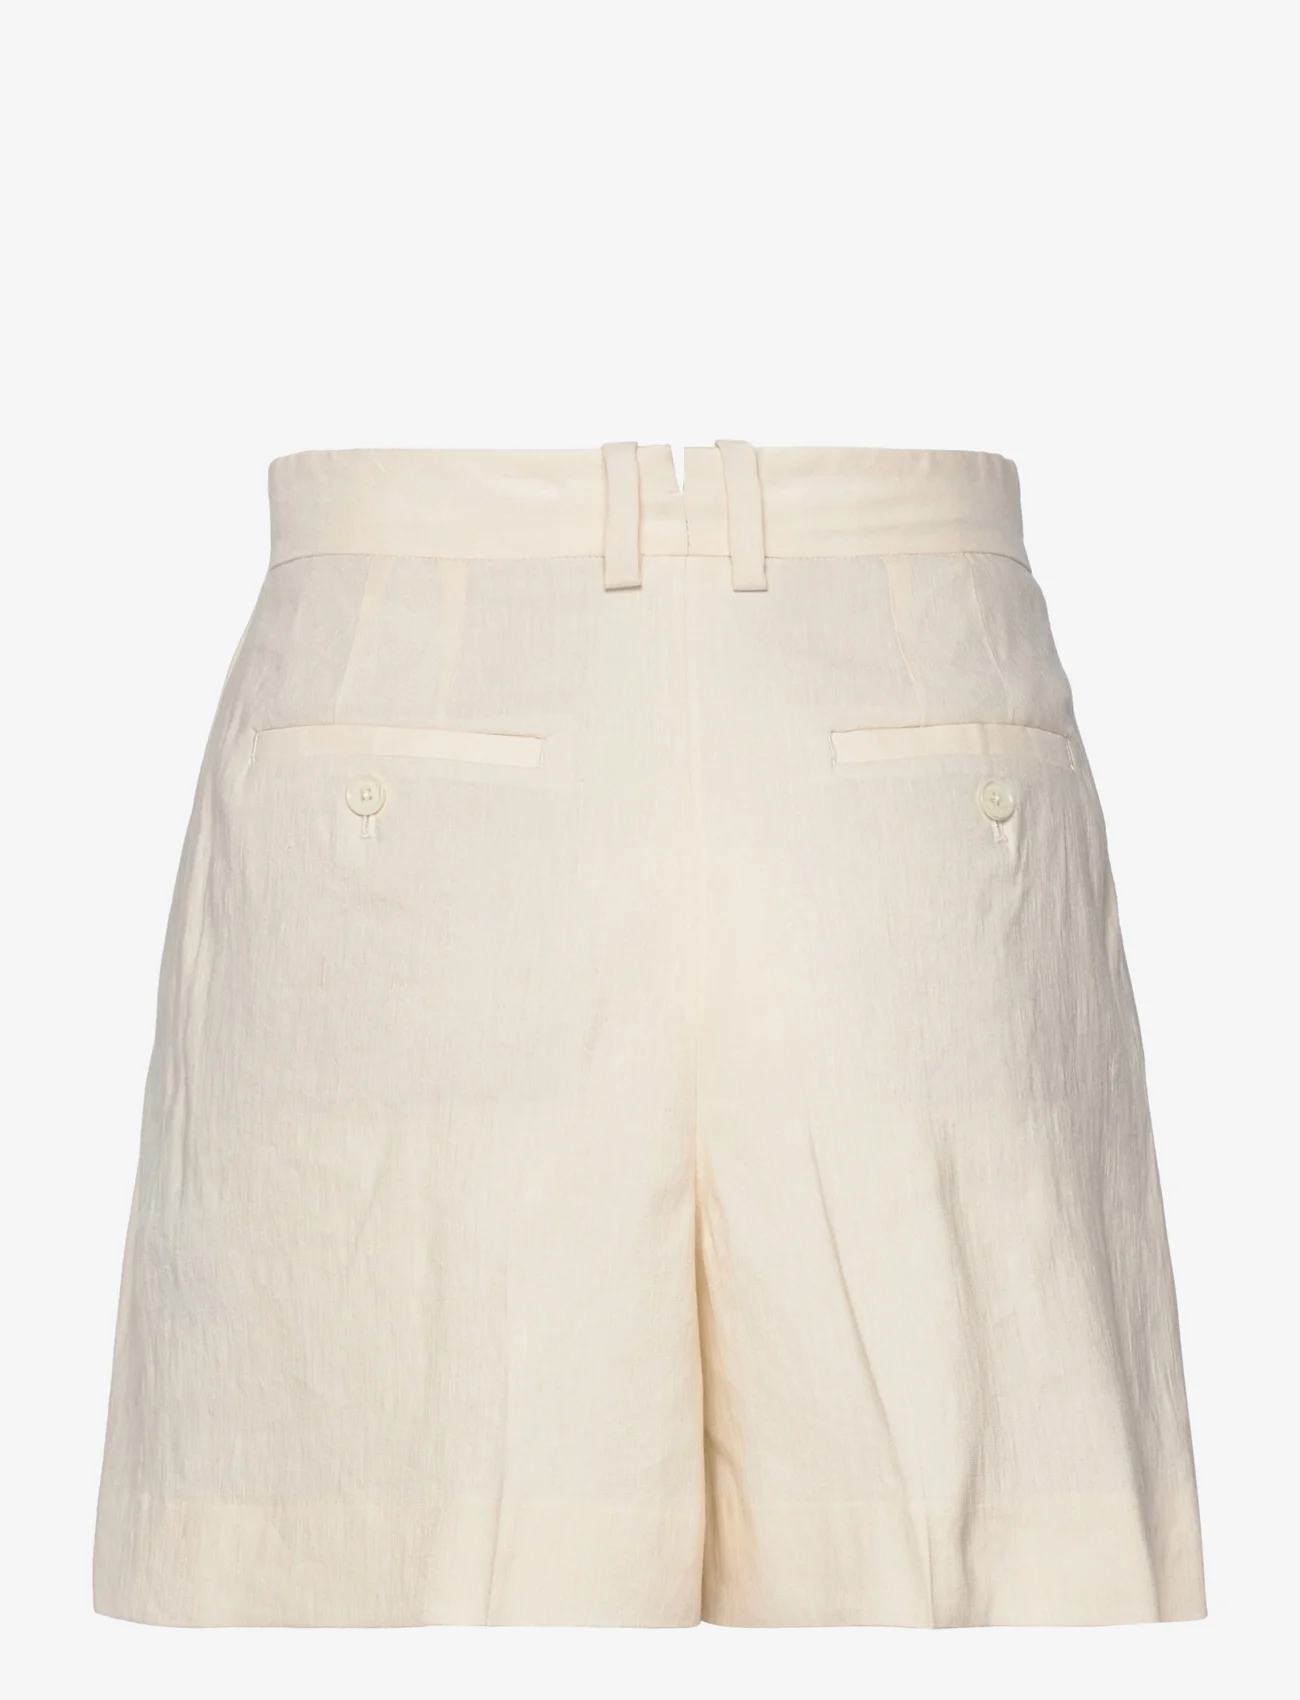 GANT - D2. STRETCH LINEN SHORTS - chino shorts - cream - 1